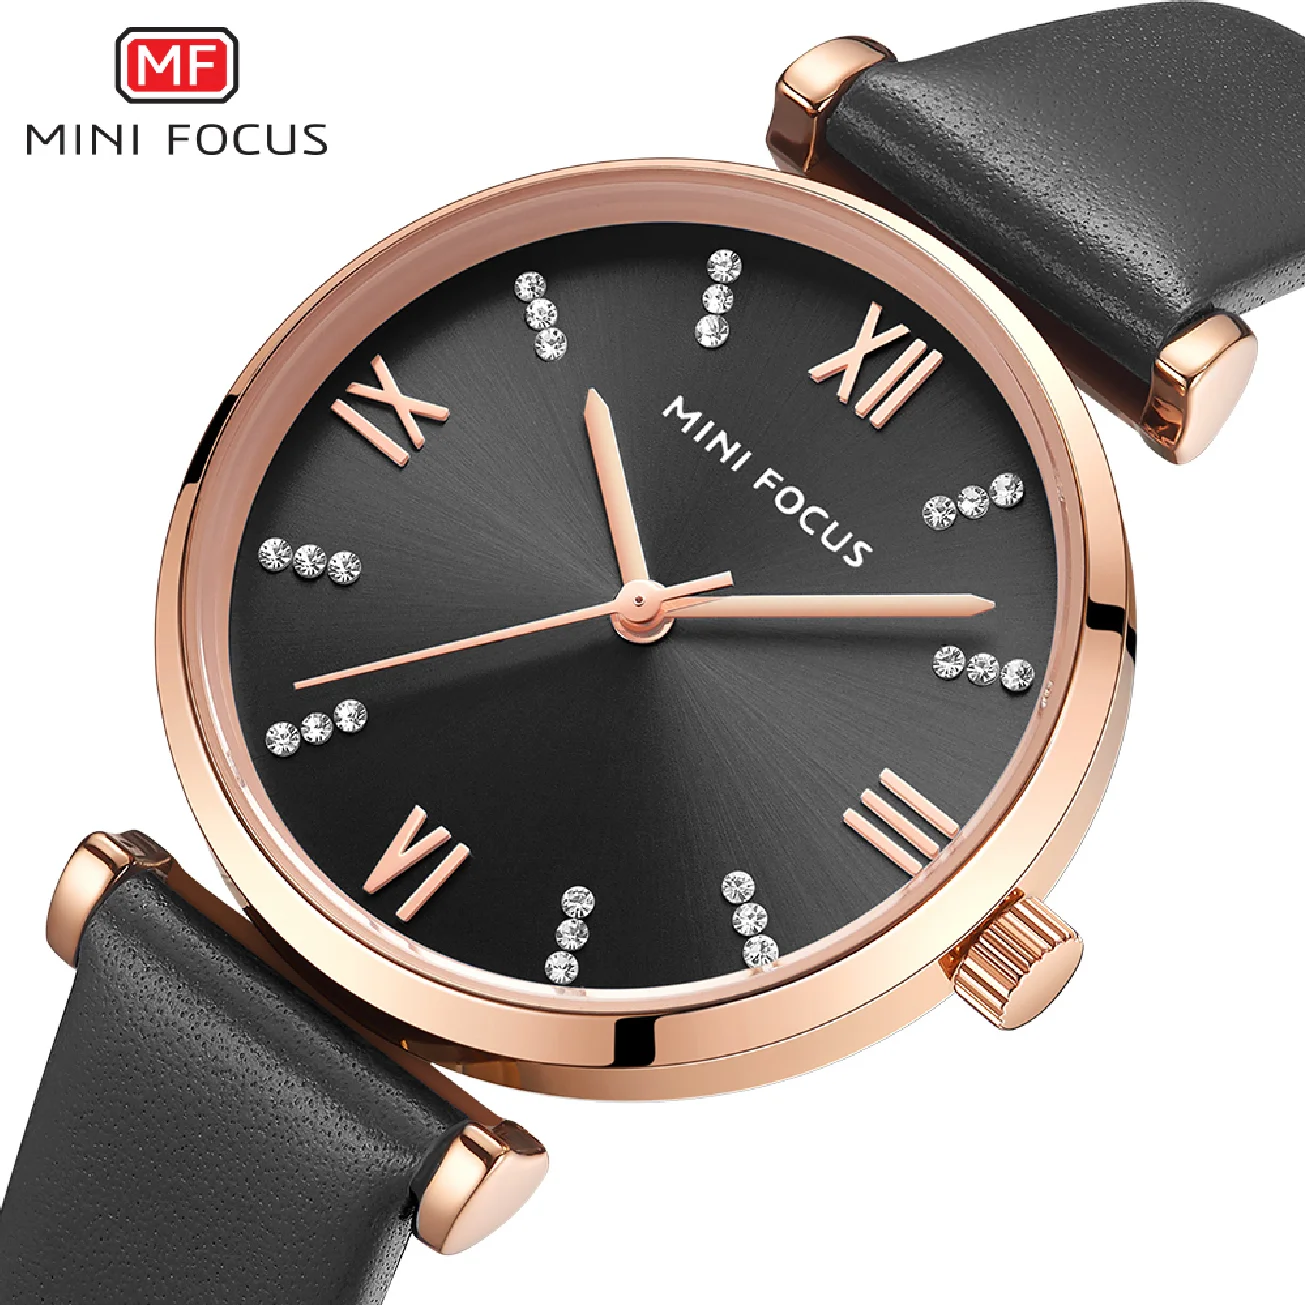 MINI FOCUS New Watches Women Luxury Fashion Ladies Waterproof Watch Black Leather Casual Female Clock Women's Gift Montre Femme